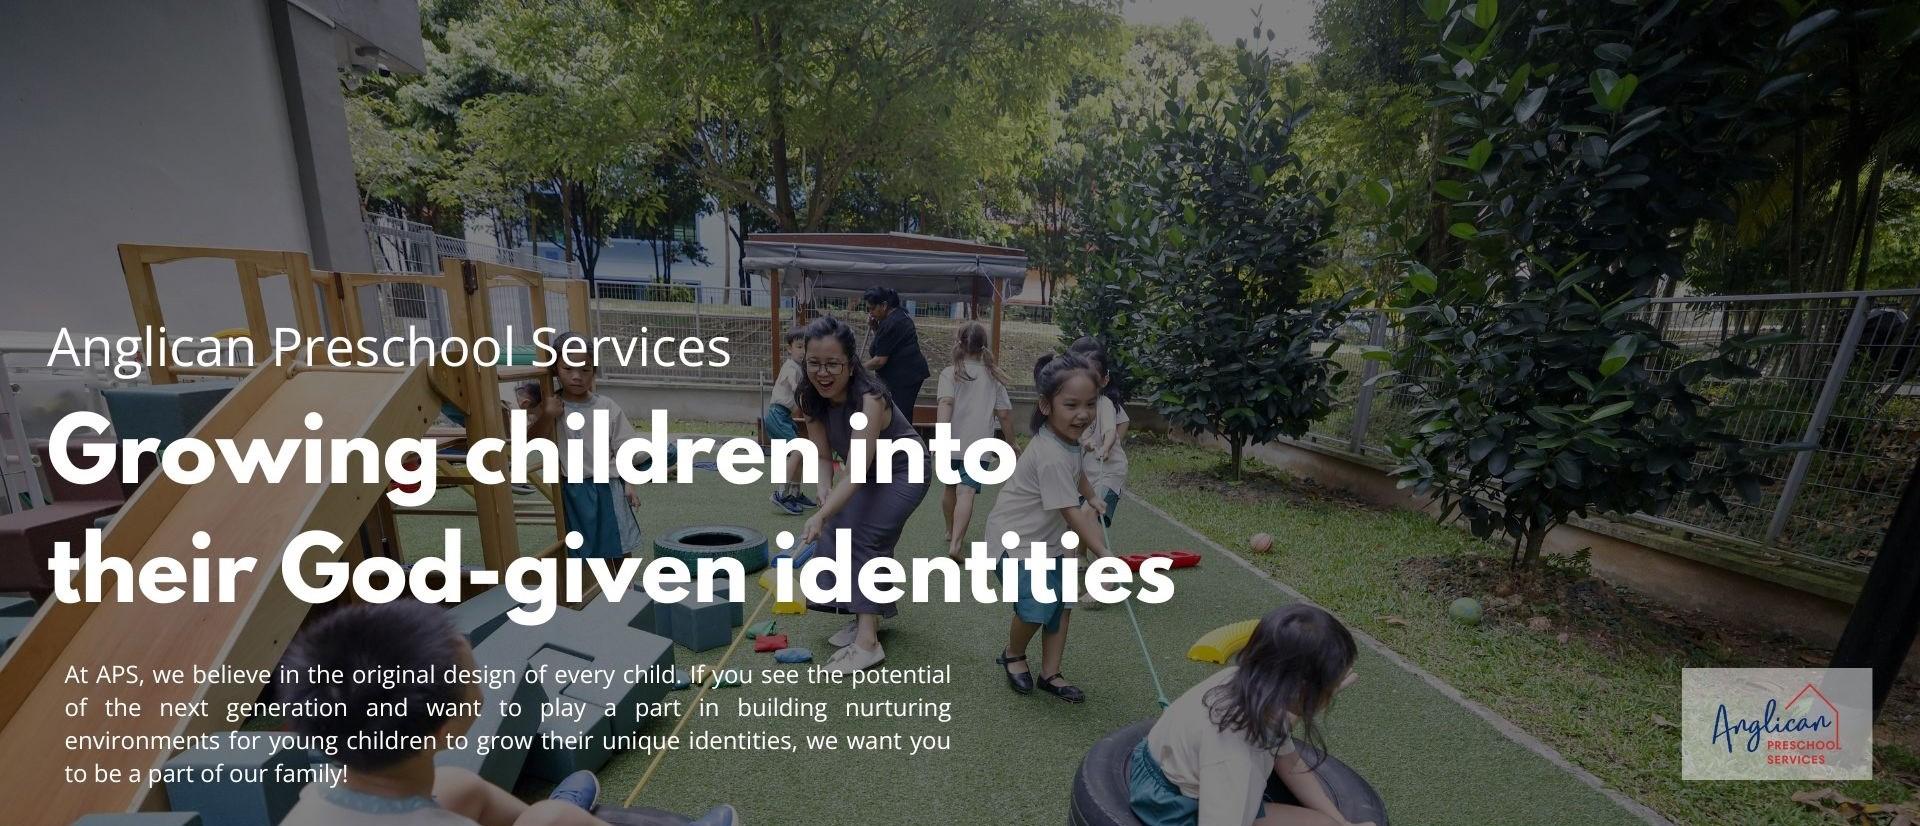 Anglican Preschool Services header cover image